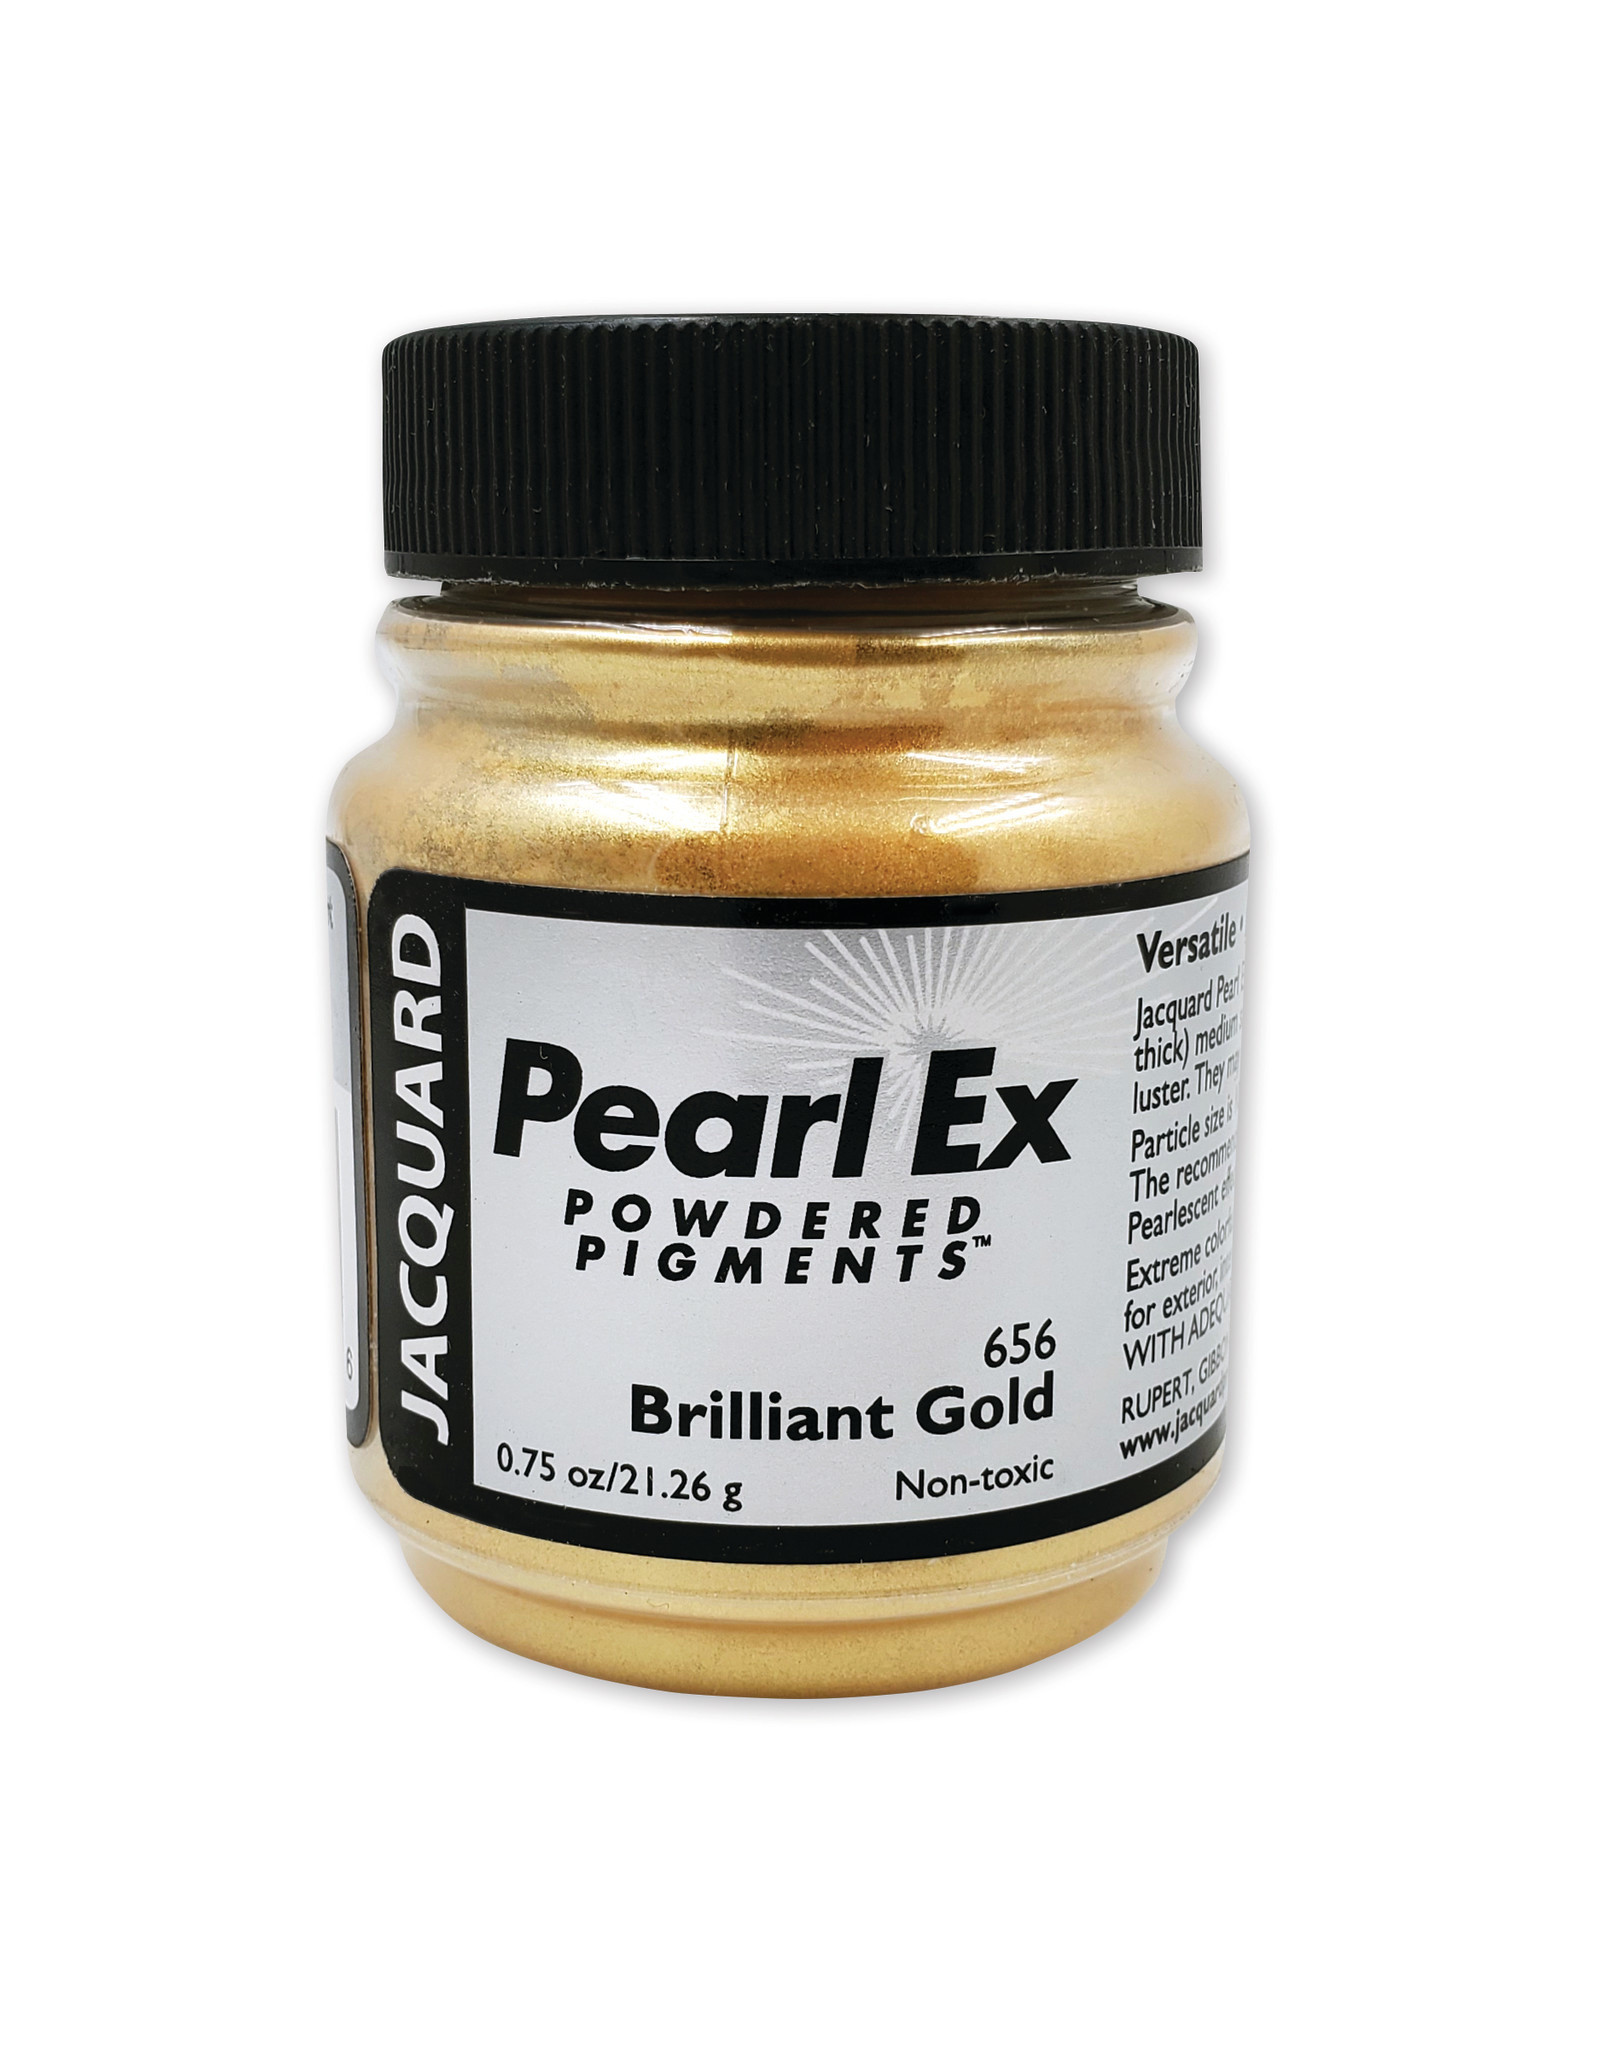 Jacquard Jacquard Pearl Ex, Brilliant Gold #656 3/4oz